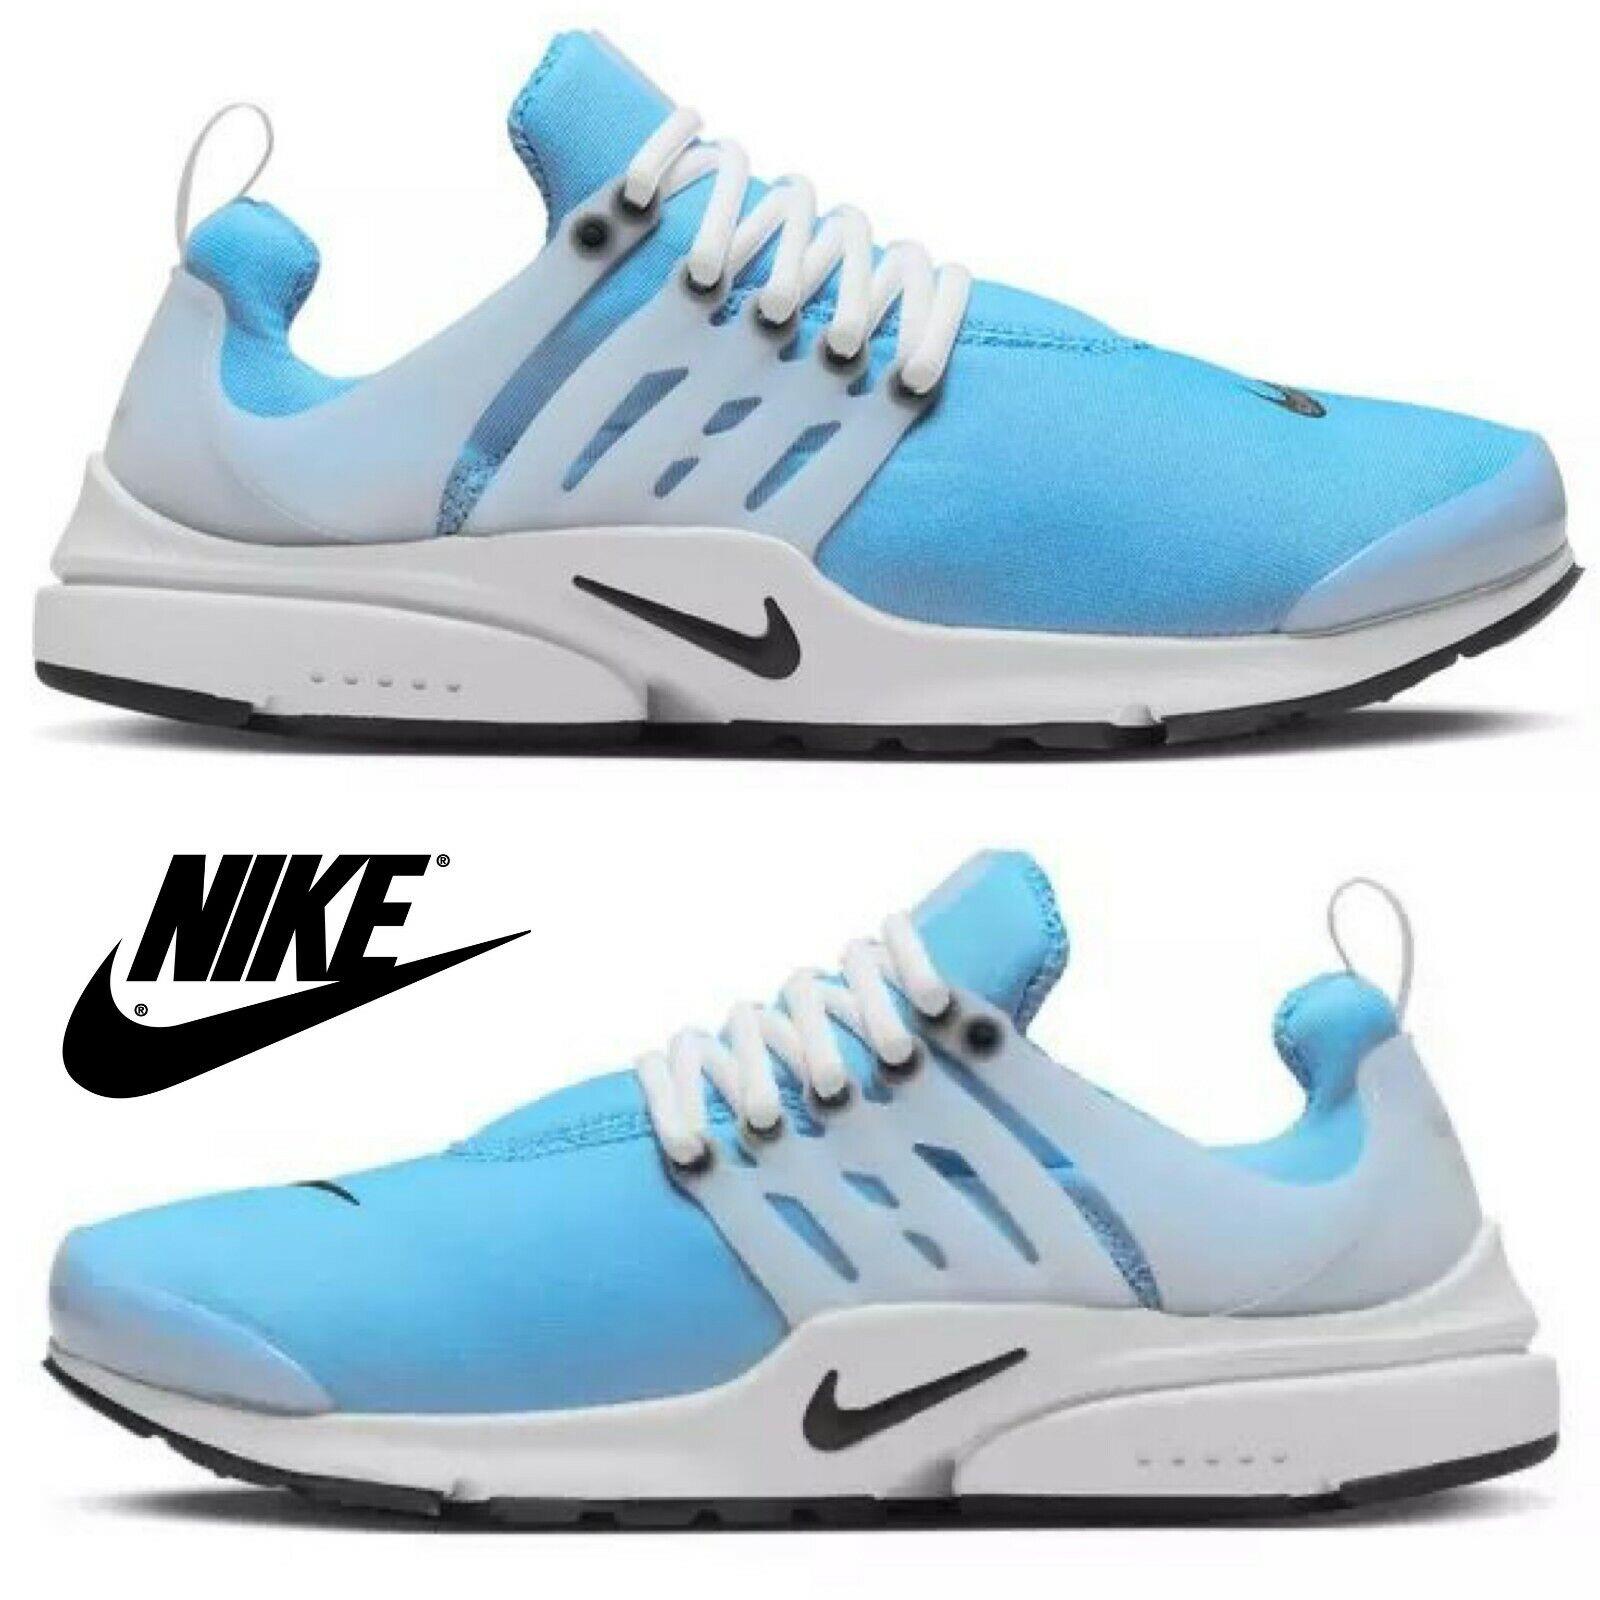 Nike Air Presto Running Sneakers Men`s Athletic Comfort Casual Shoes Light Blue - Blue , University Blue/Black/White Manufacturer